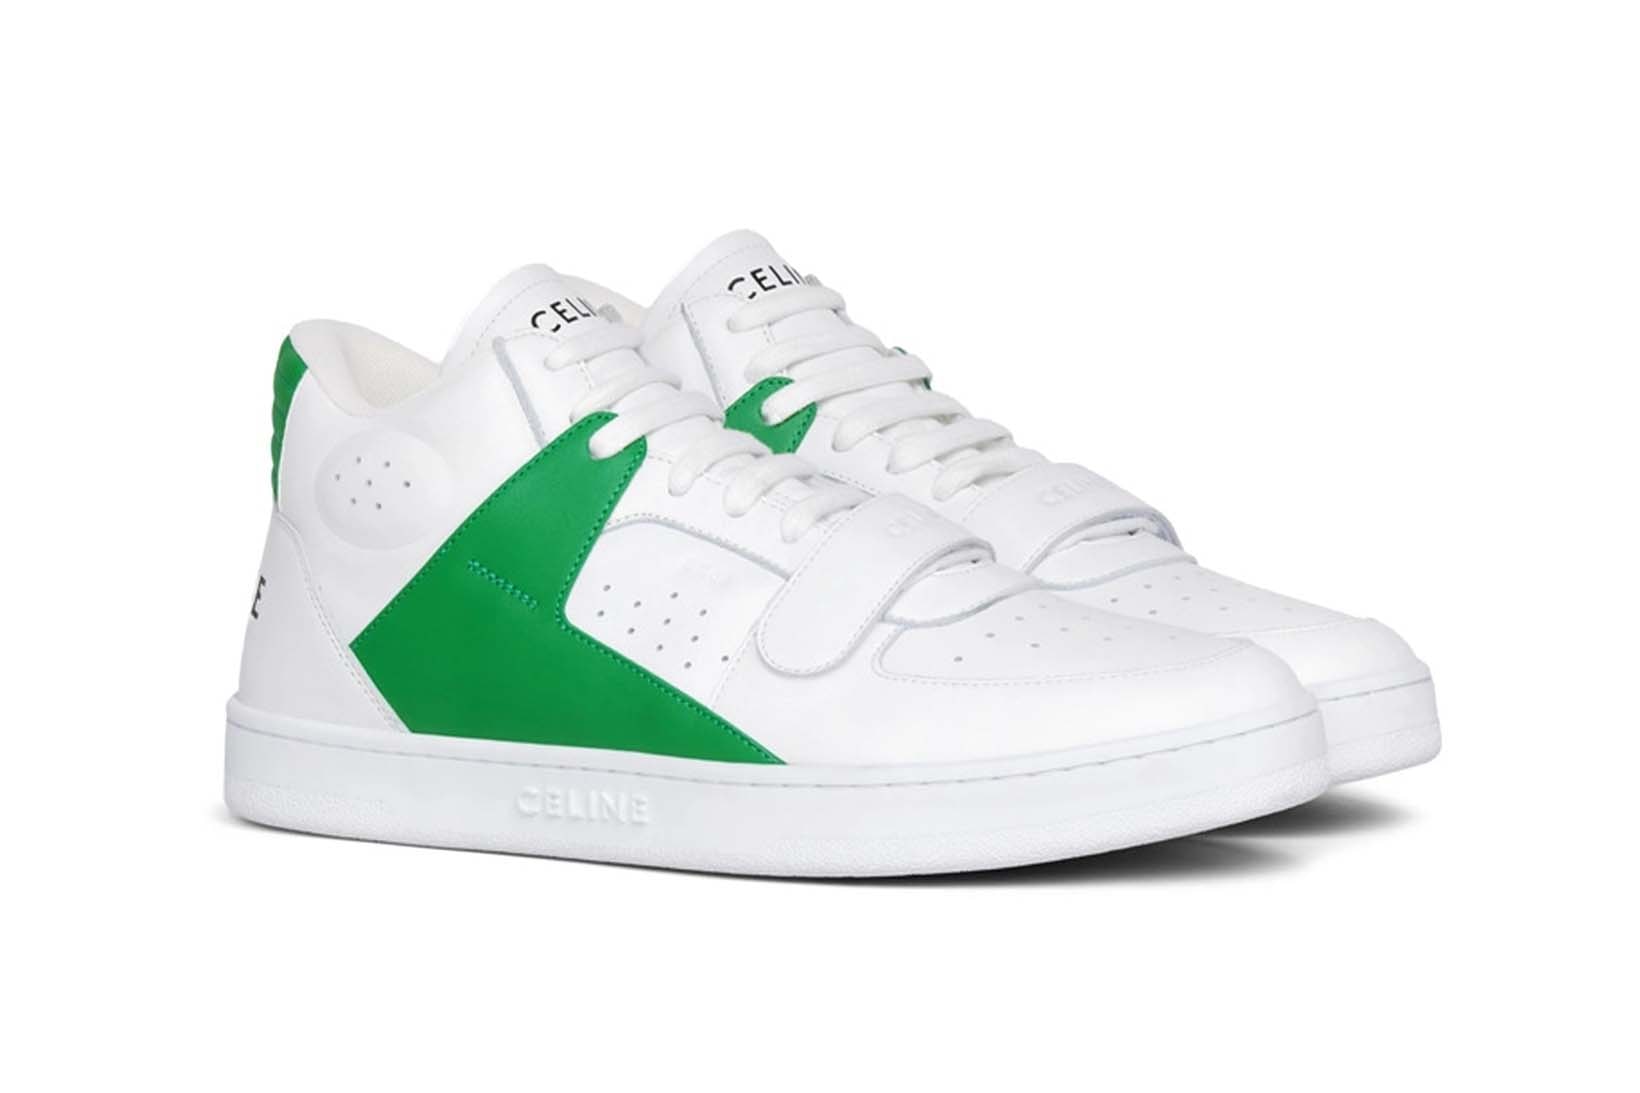 Celine CT-02 Mid Sneaker White Green Price Release Date